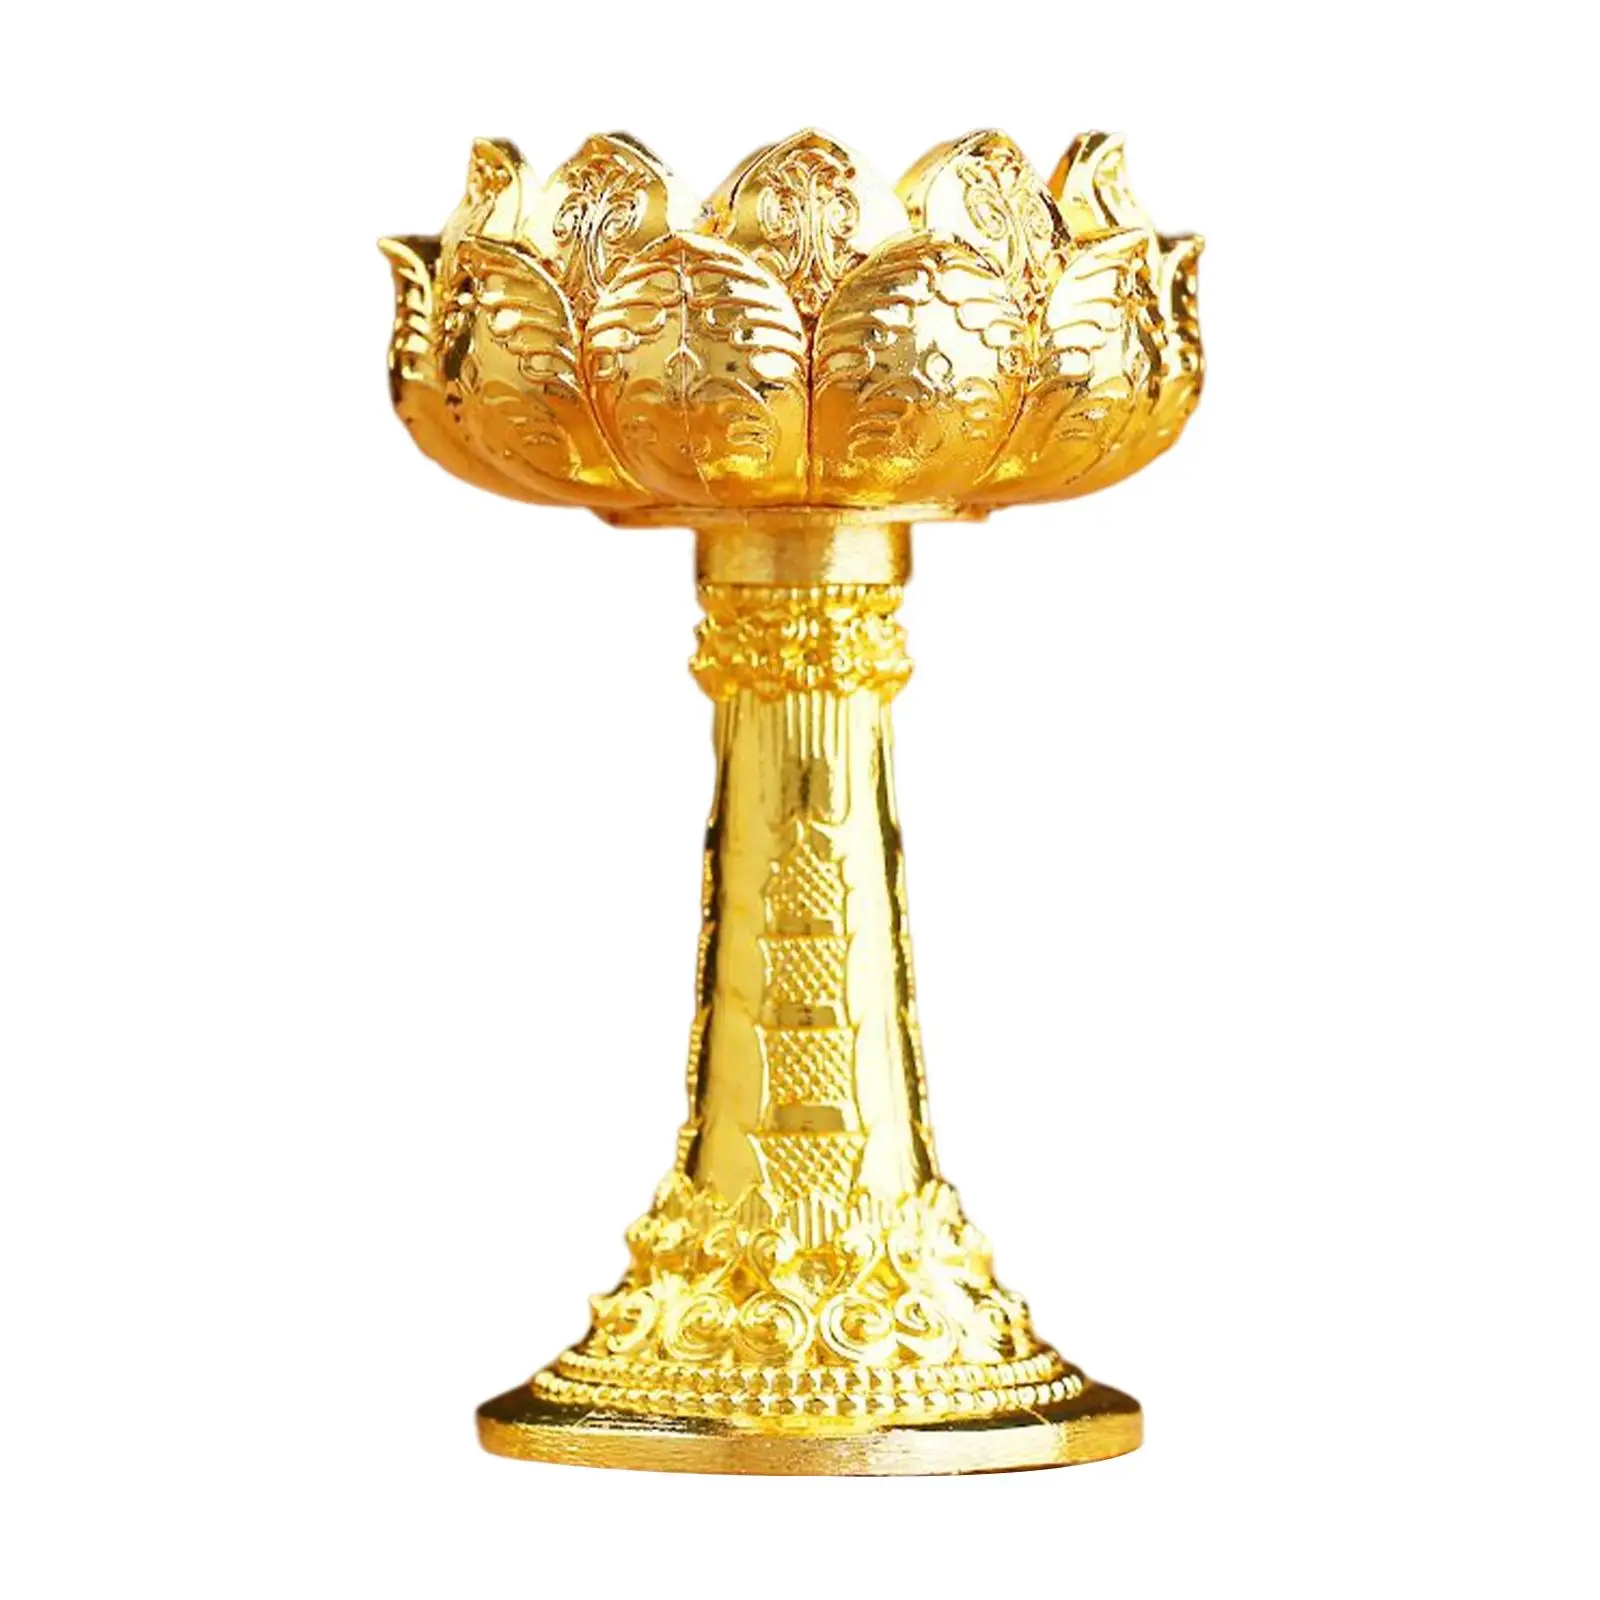 Lotus Ghee Lamp Holder Candle Holder Buddhist Supplies Meditation Tibetan Butter Lamp Holder for Table Centerpiece Decor Gift